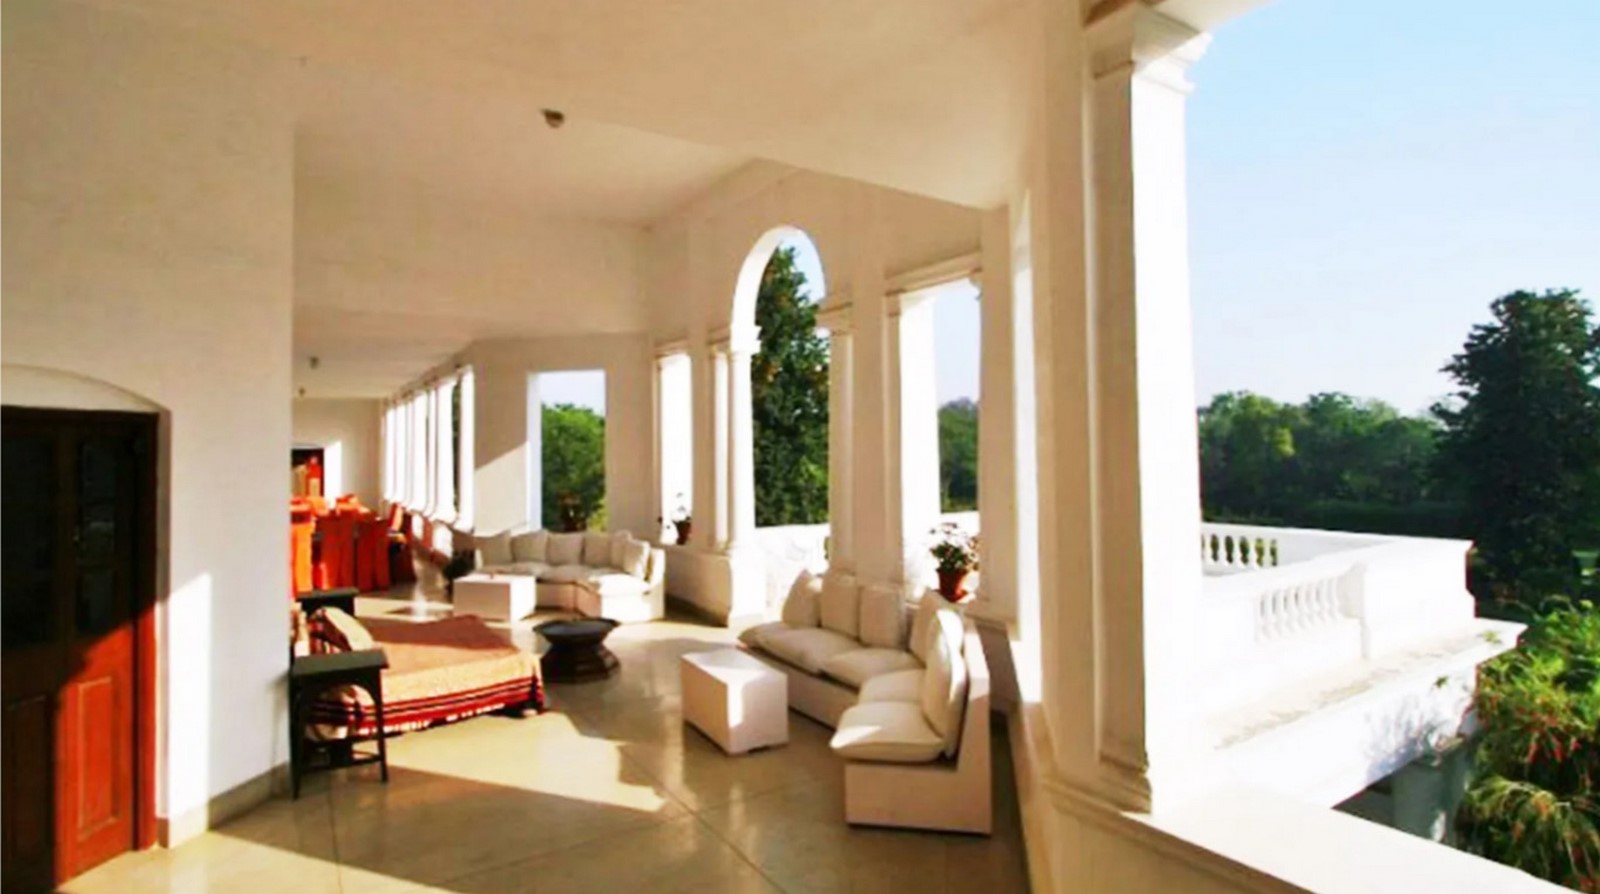 Saif Ali Khan House: 10 Facts through Architect's Lens - Sheet6